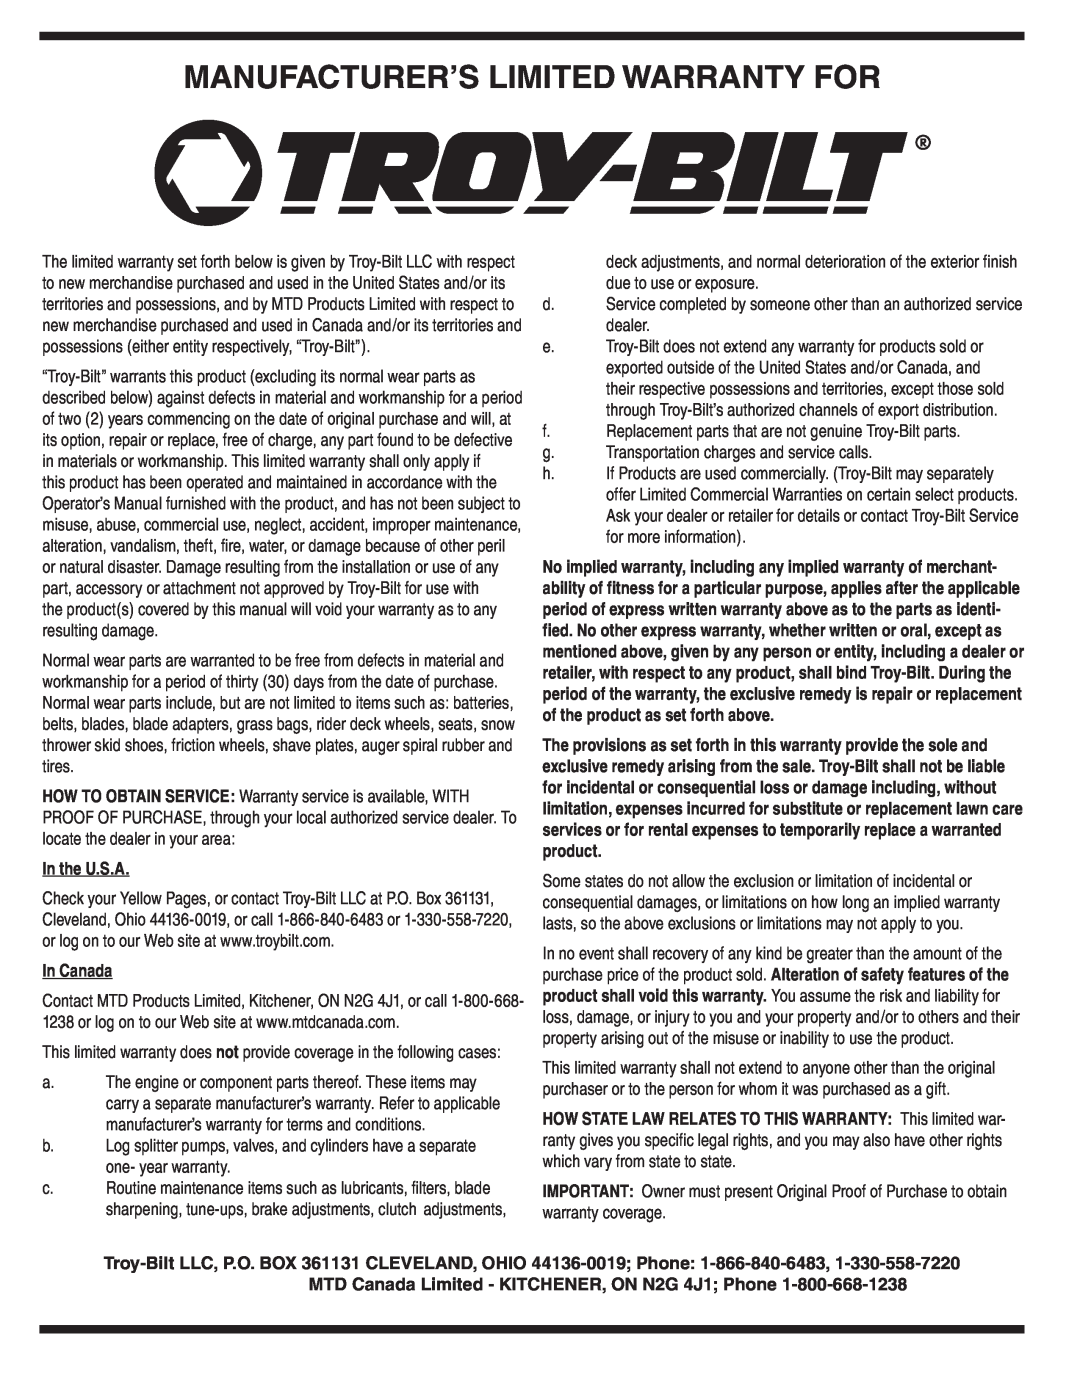 Troy-Bilt 410, 420 warranty Manufacturer’S Limited Warranty For, In the U.S.A, In Canada 